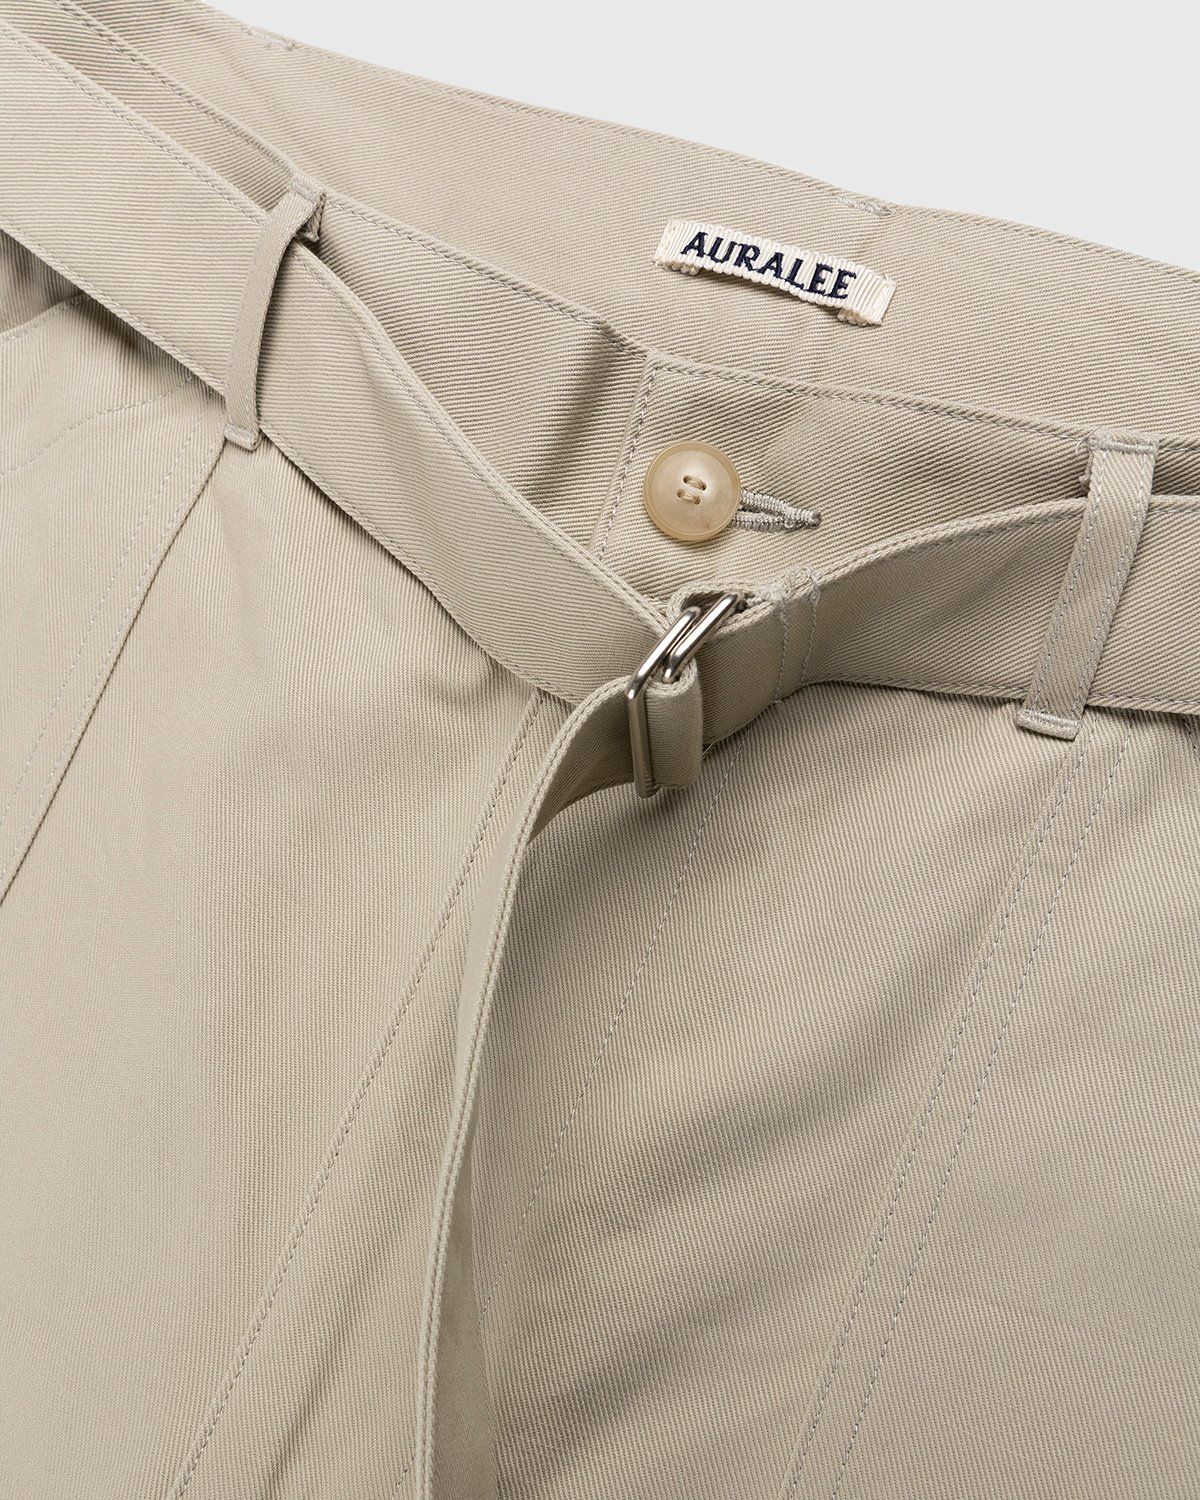 Auralee – Cotton Woven Pants Khaki - Trousers - Multi - Image 4